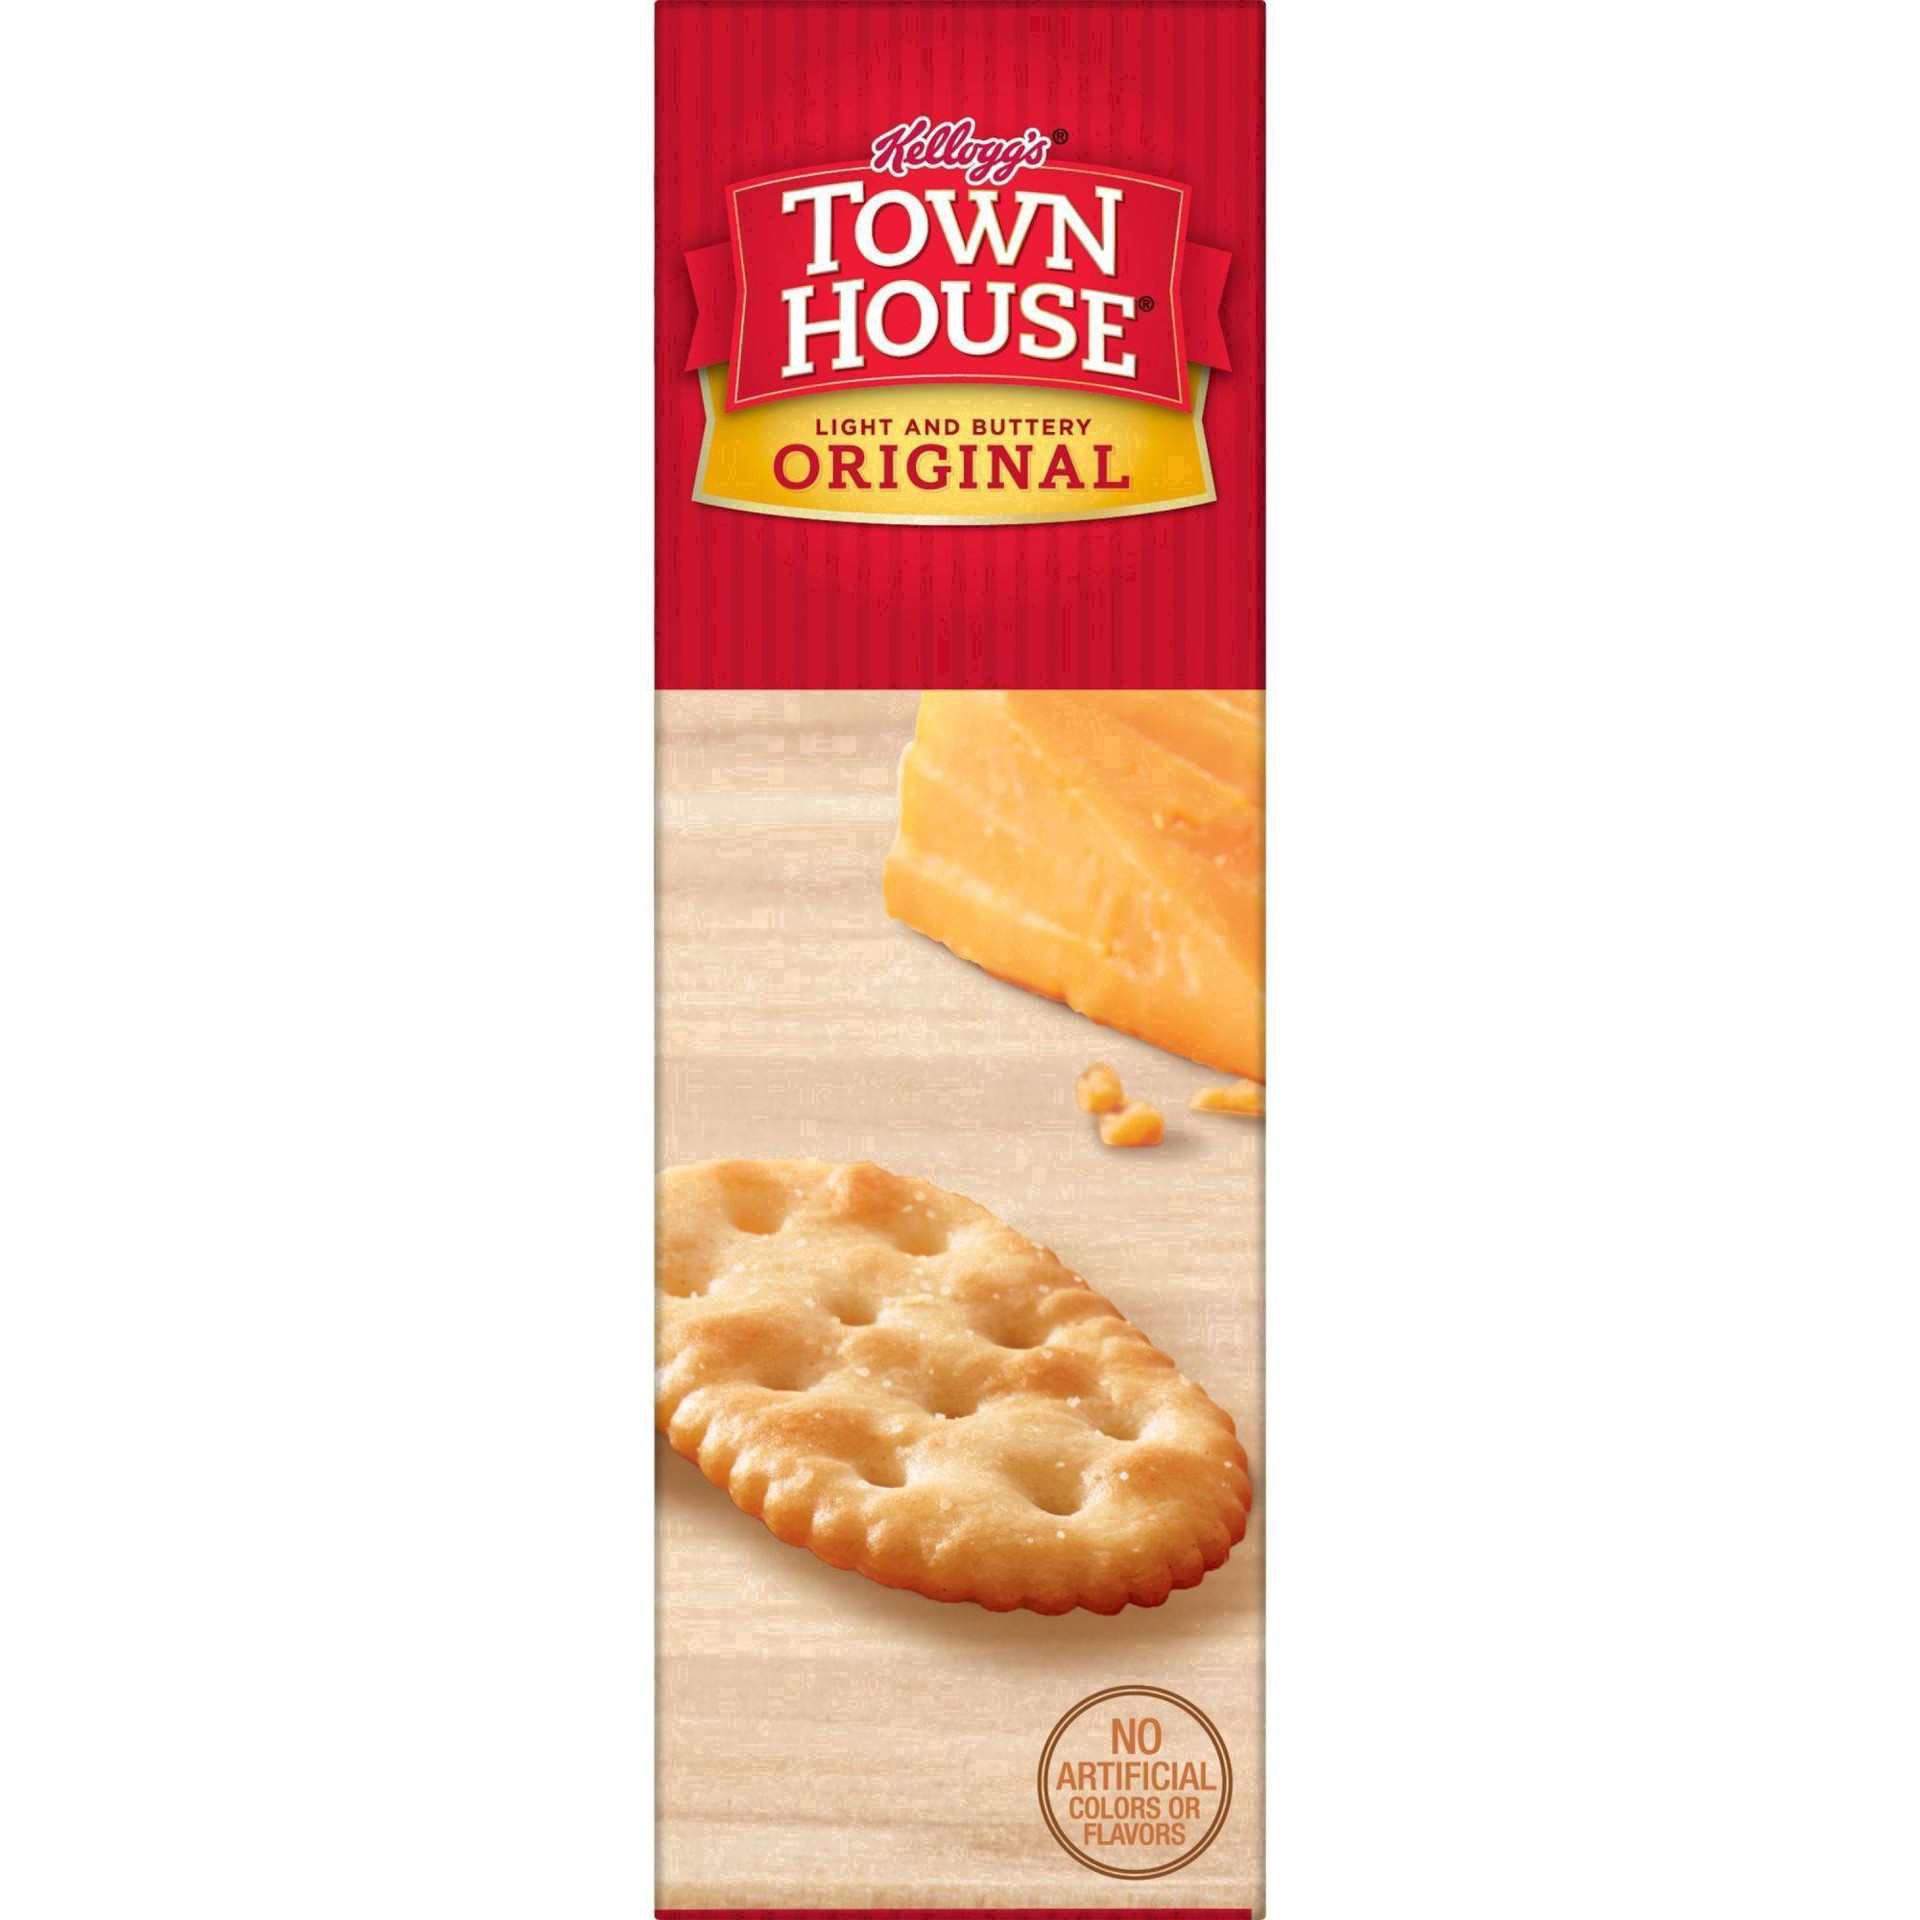 slide 75 of 101, Town House Kellogg's Town House Original Snack Crackers - 13.8oz, 13.8 oz